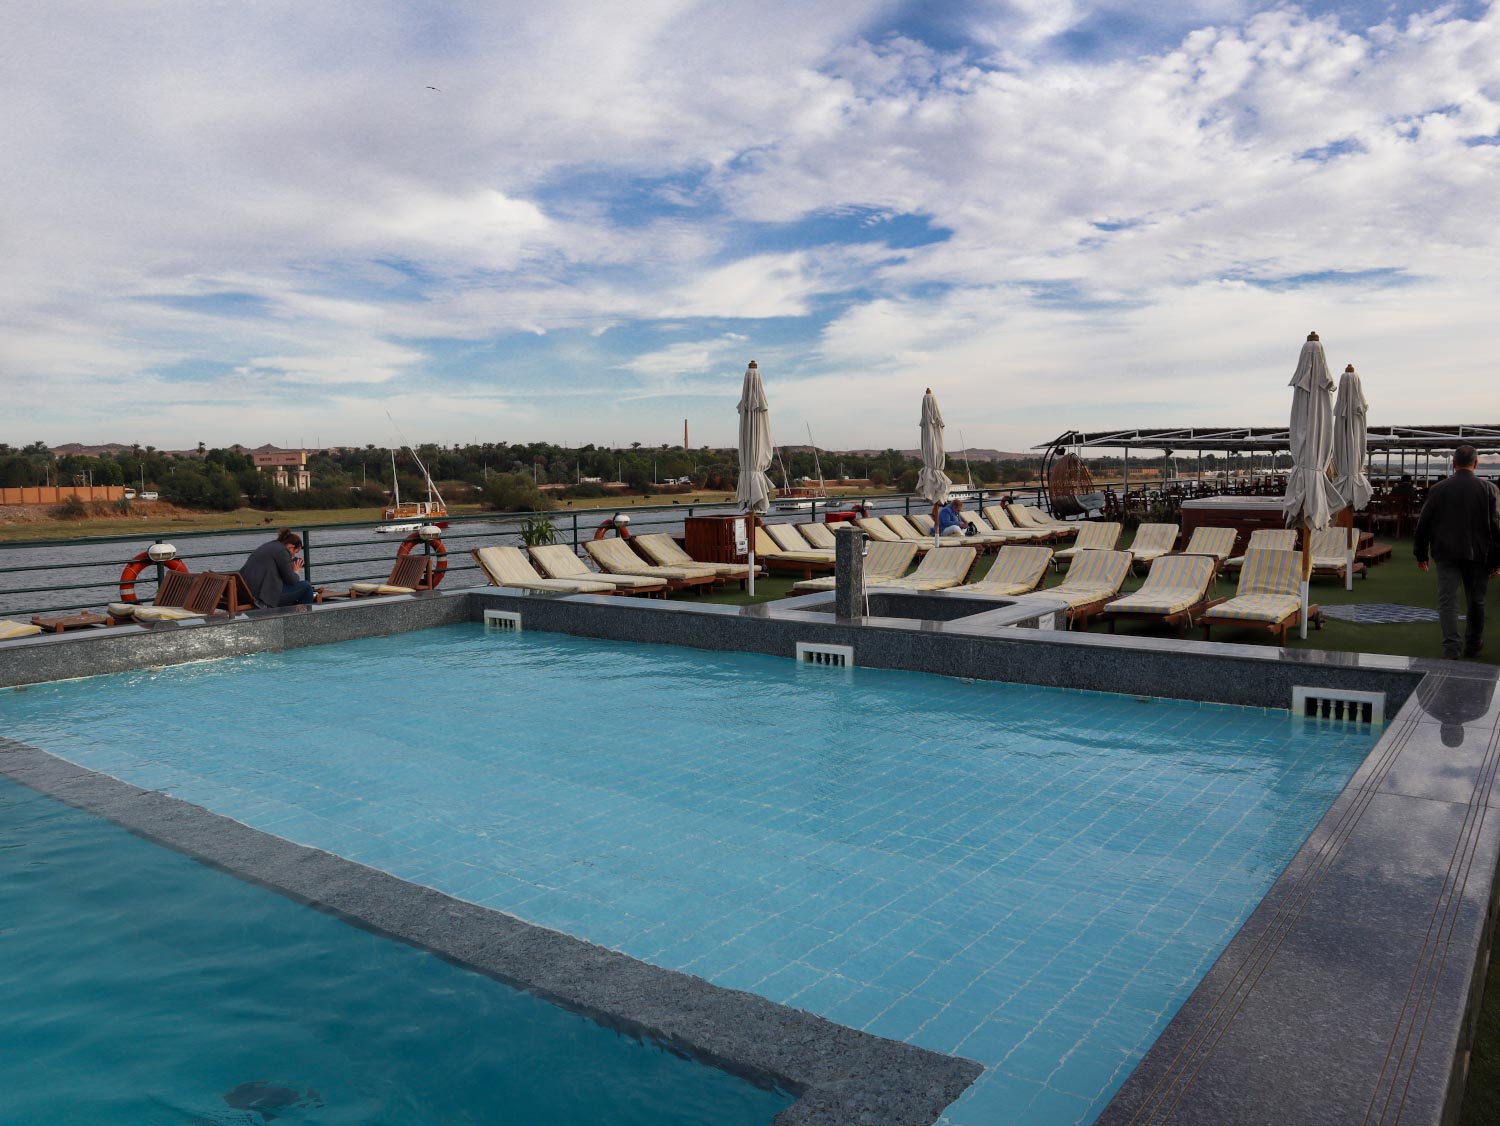 Swimming pool on a Nile cruise ship